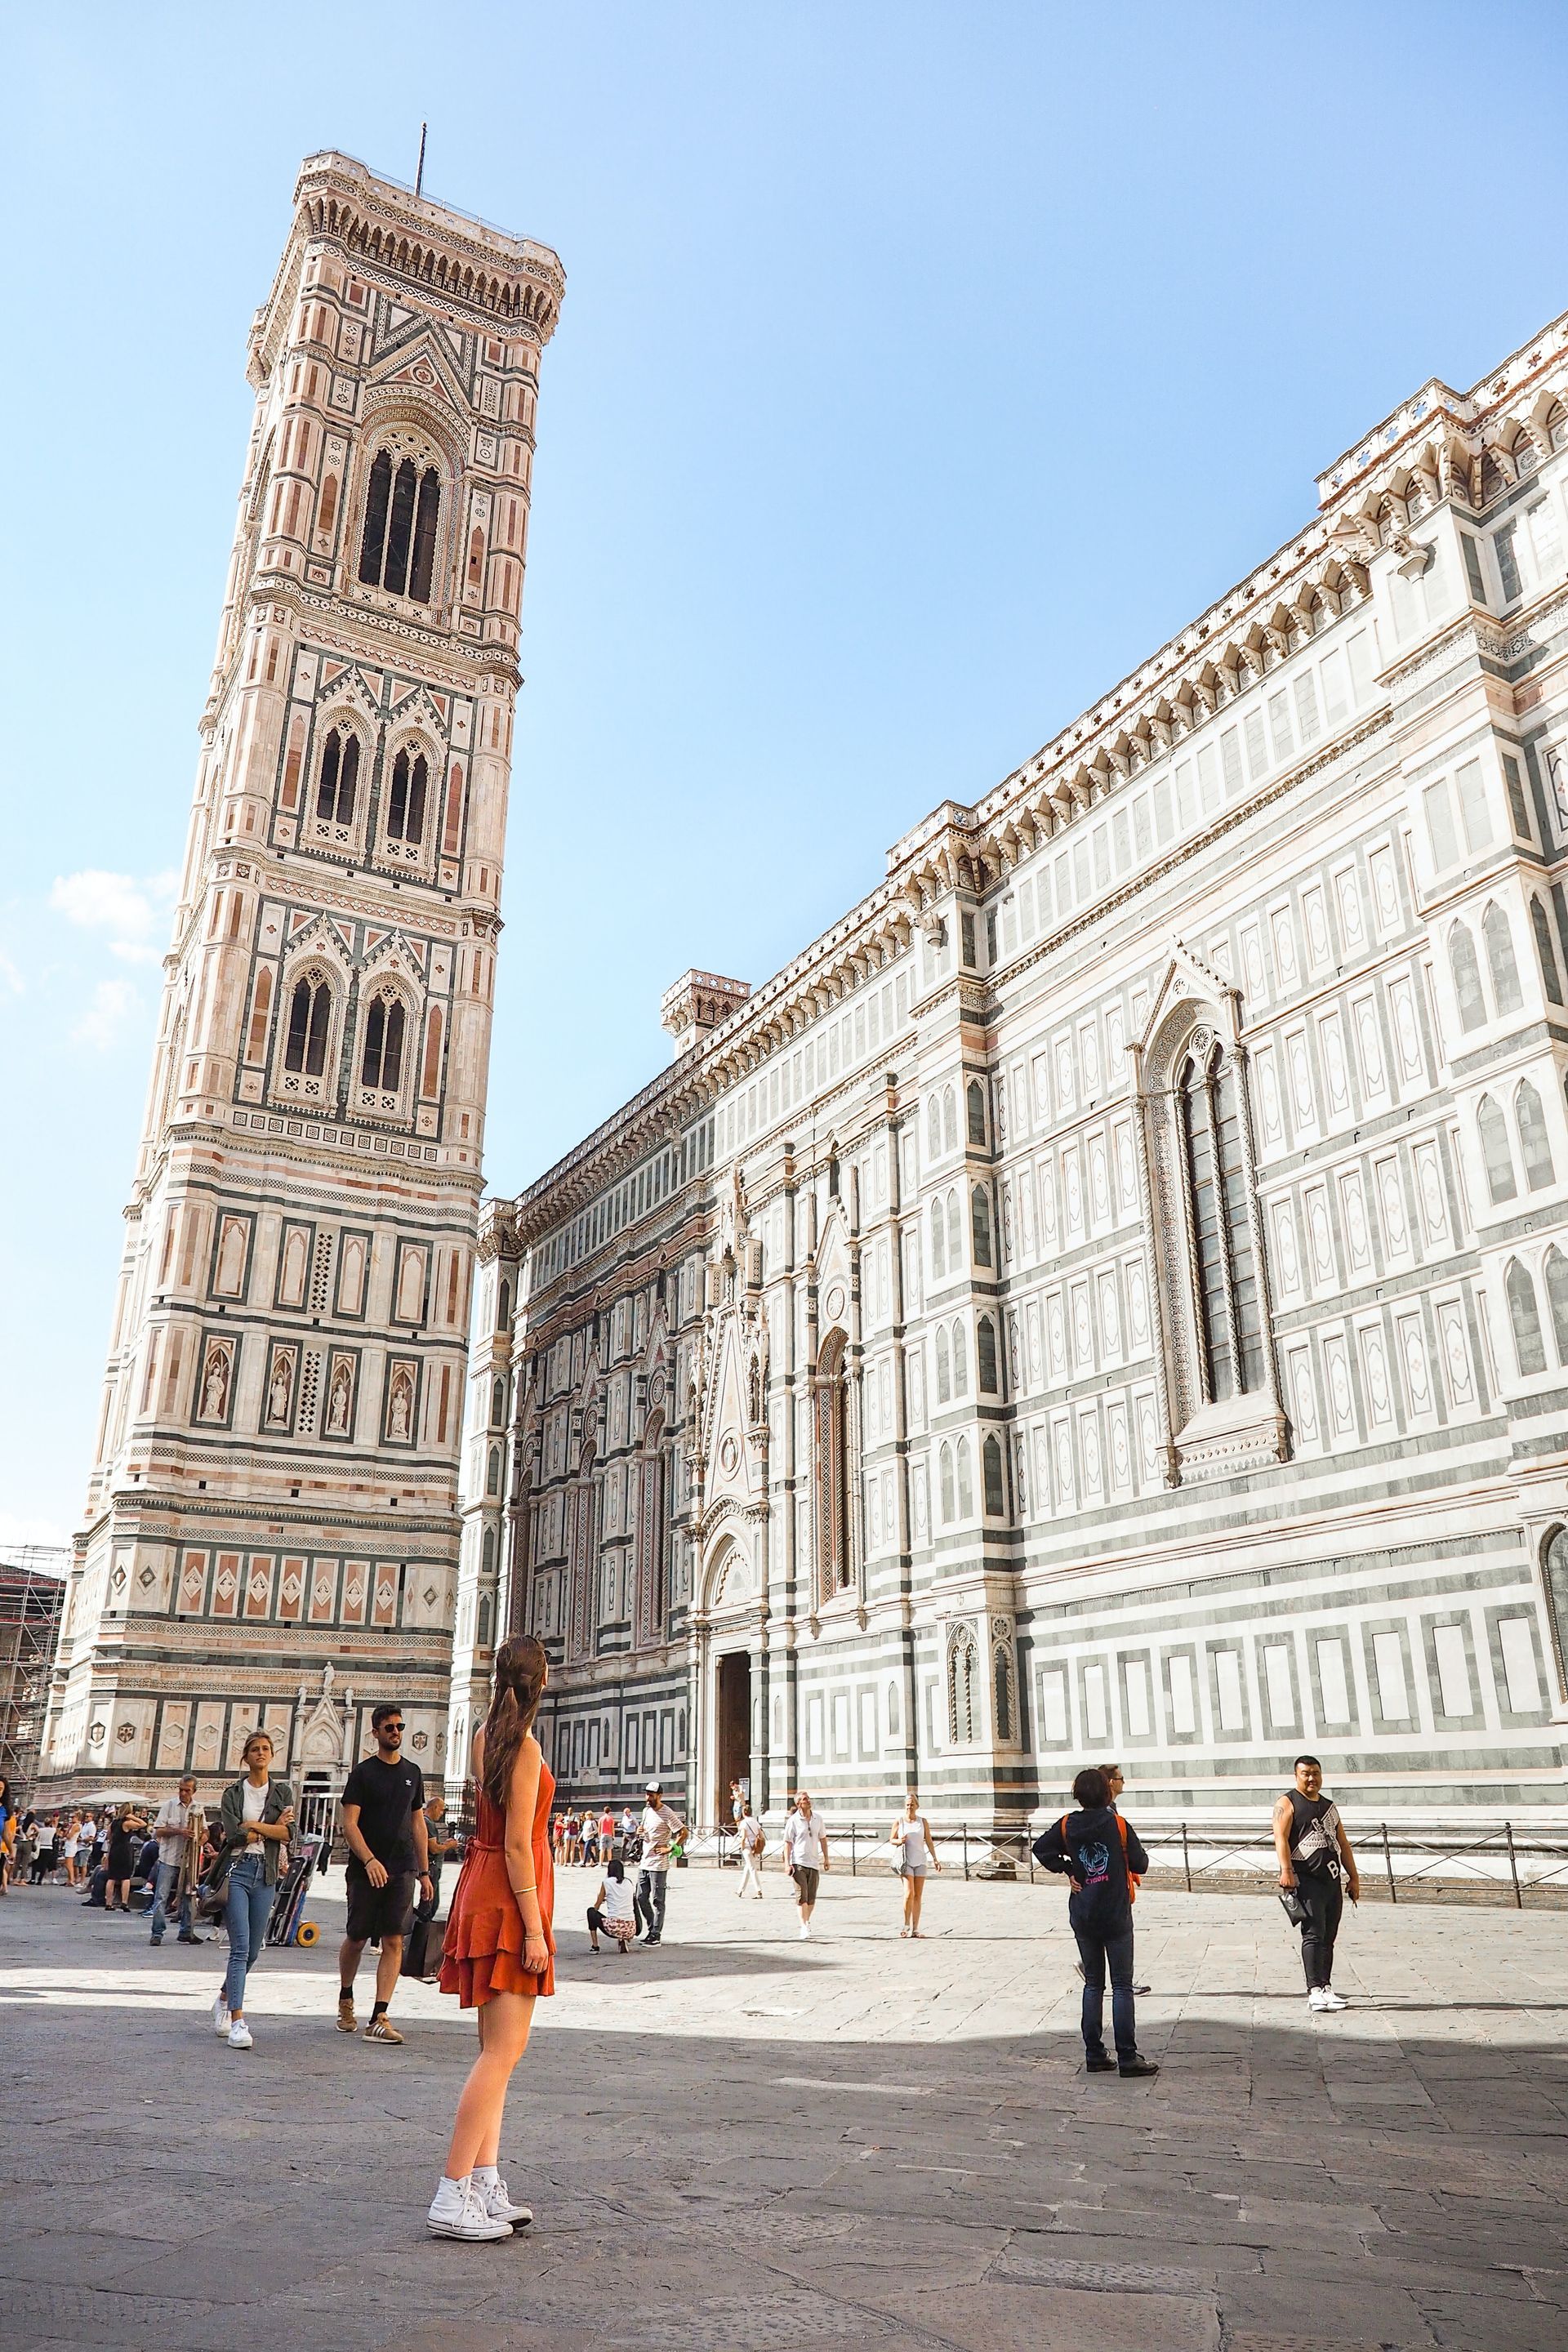 Cathedral of Santa Maria Fiori and Piazza Duomo